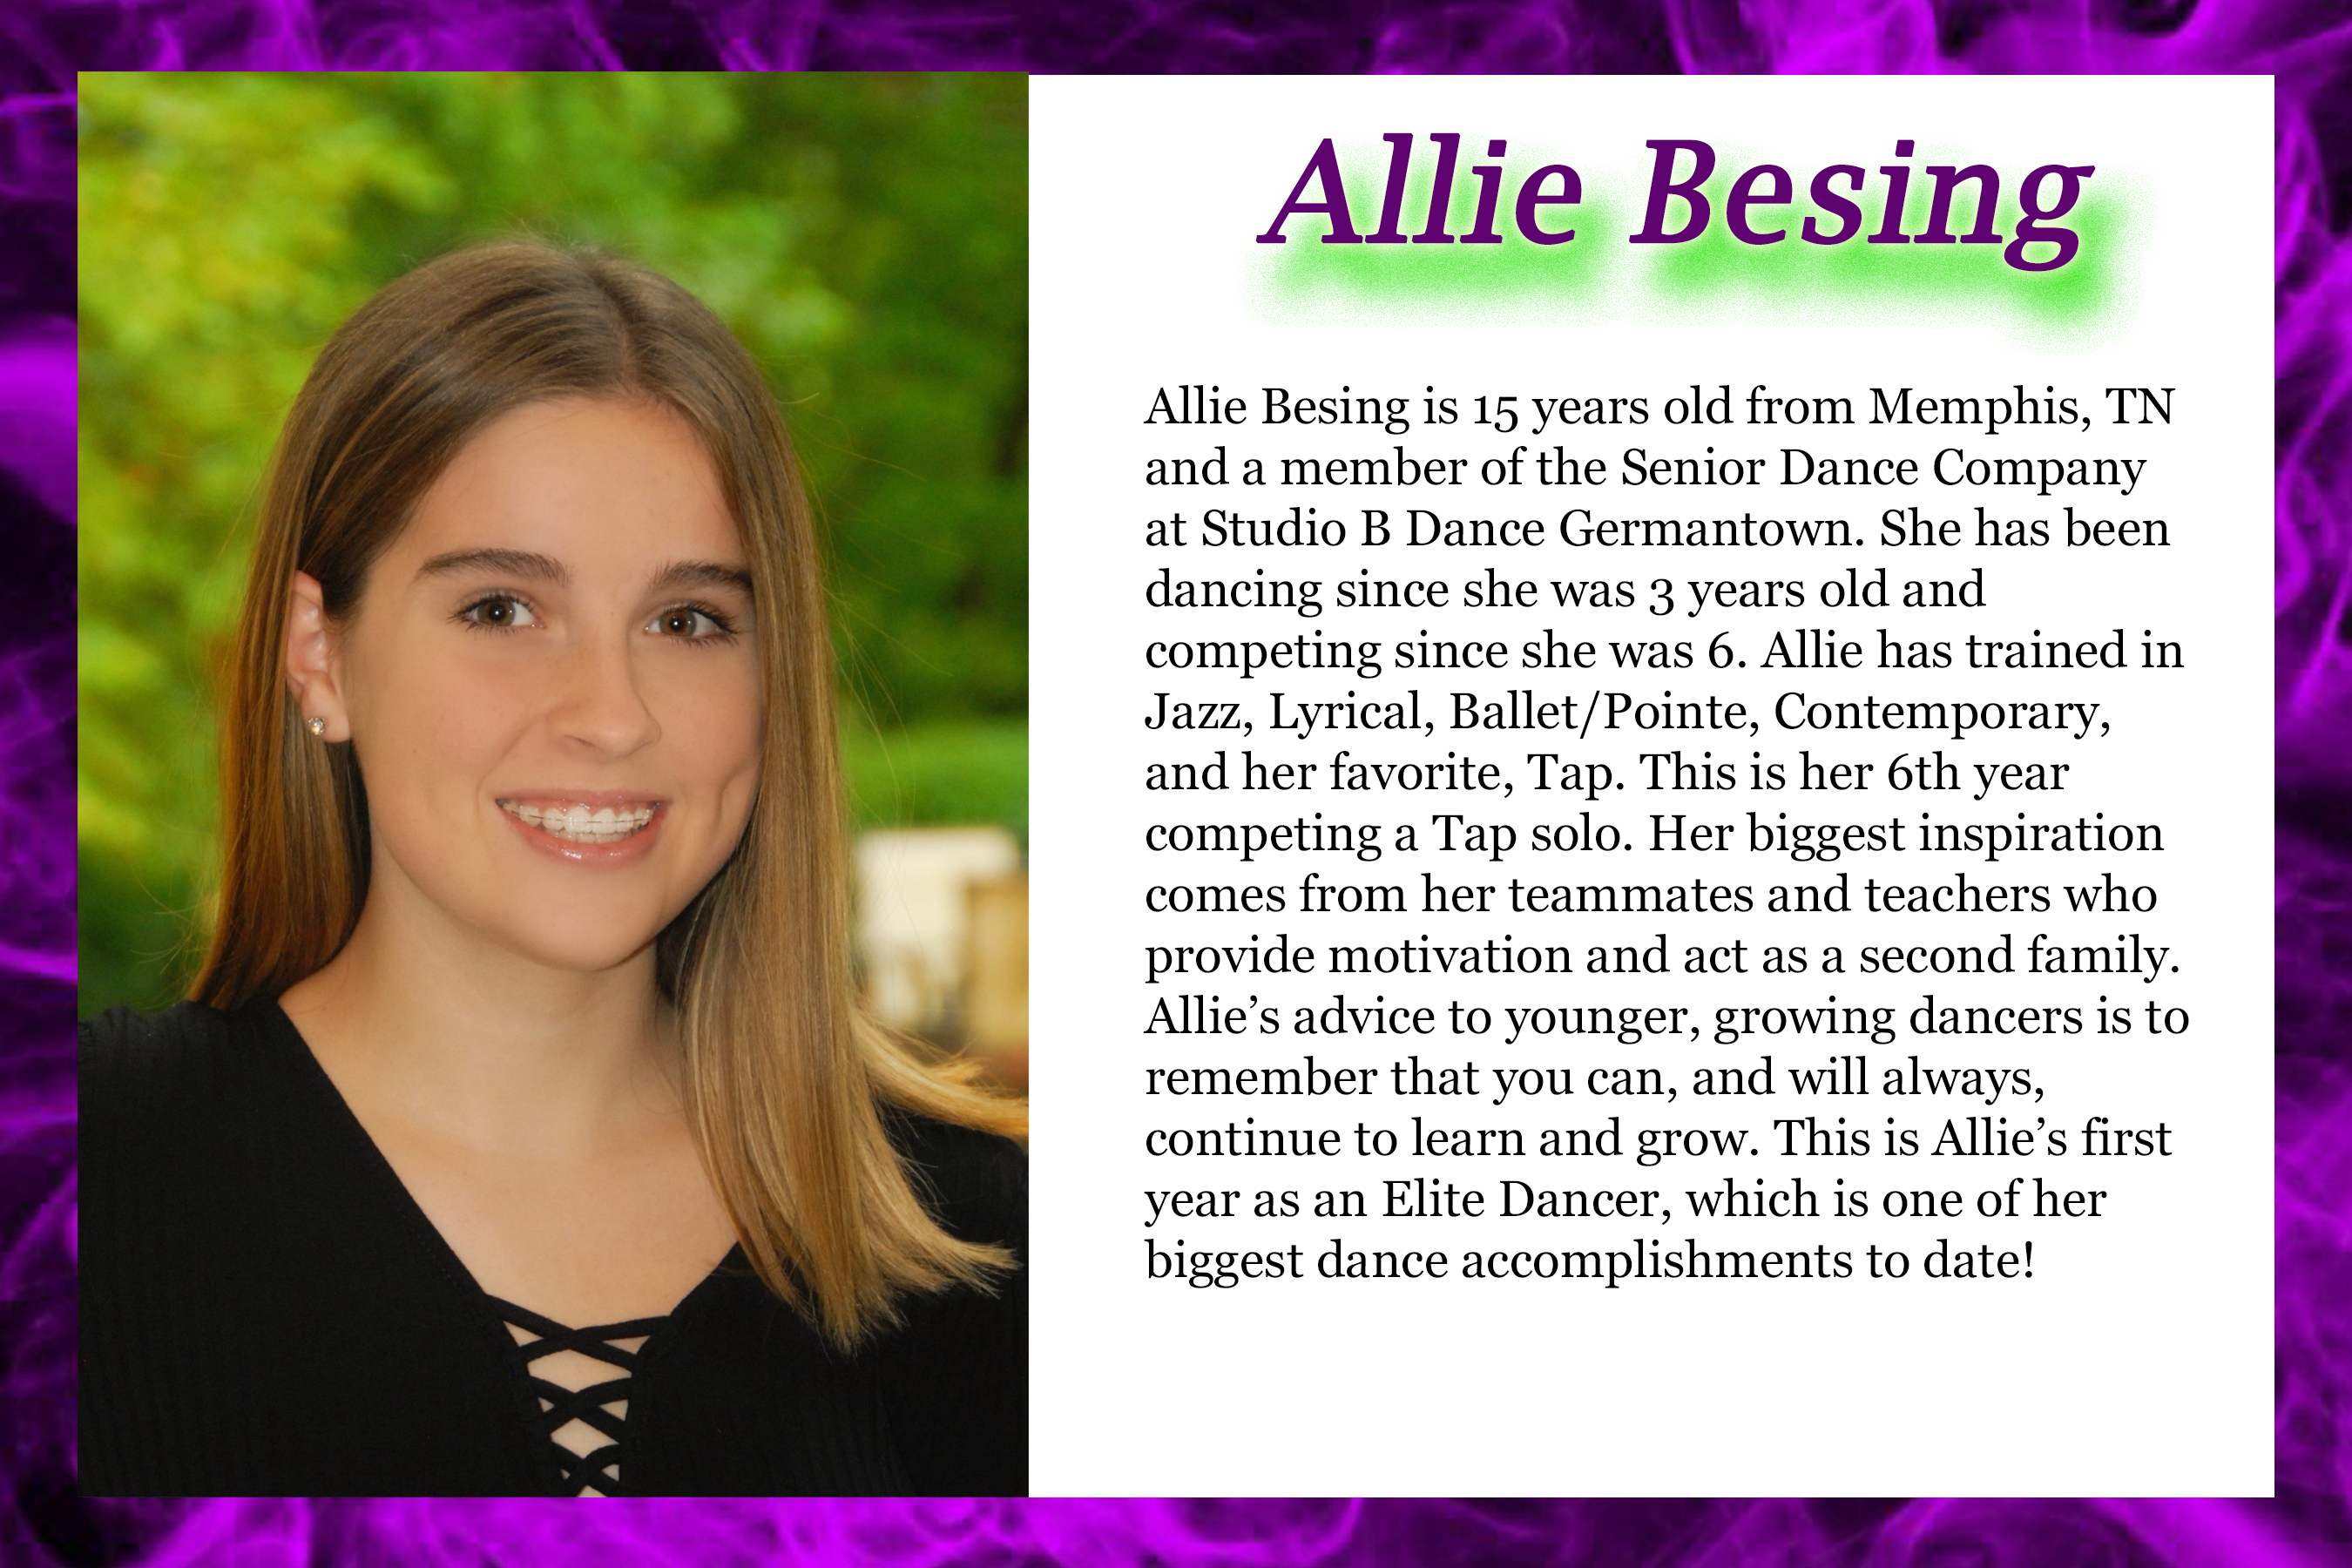 Allie Besing